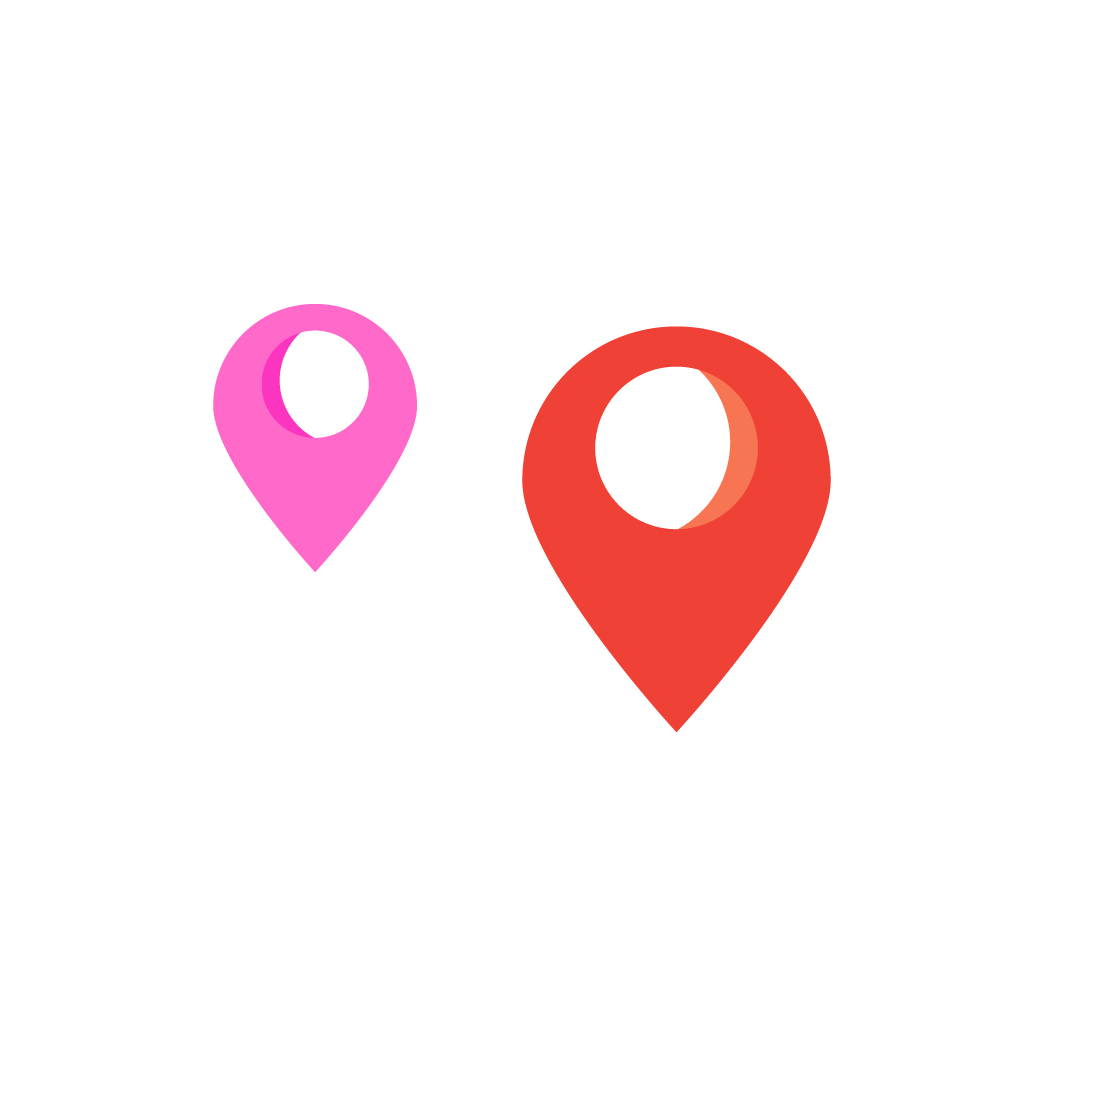 Vector minimalist location logo preview image.